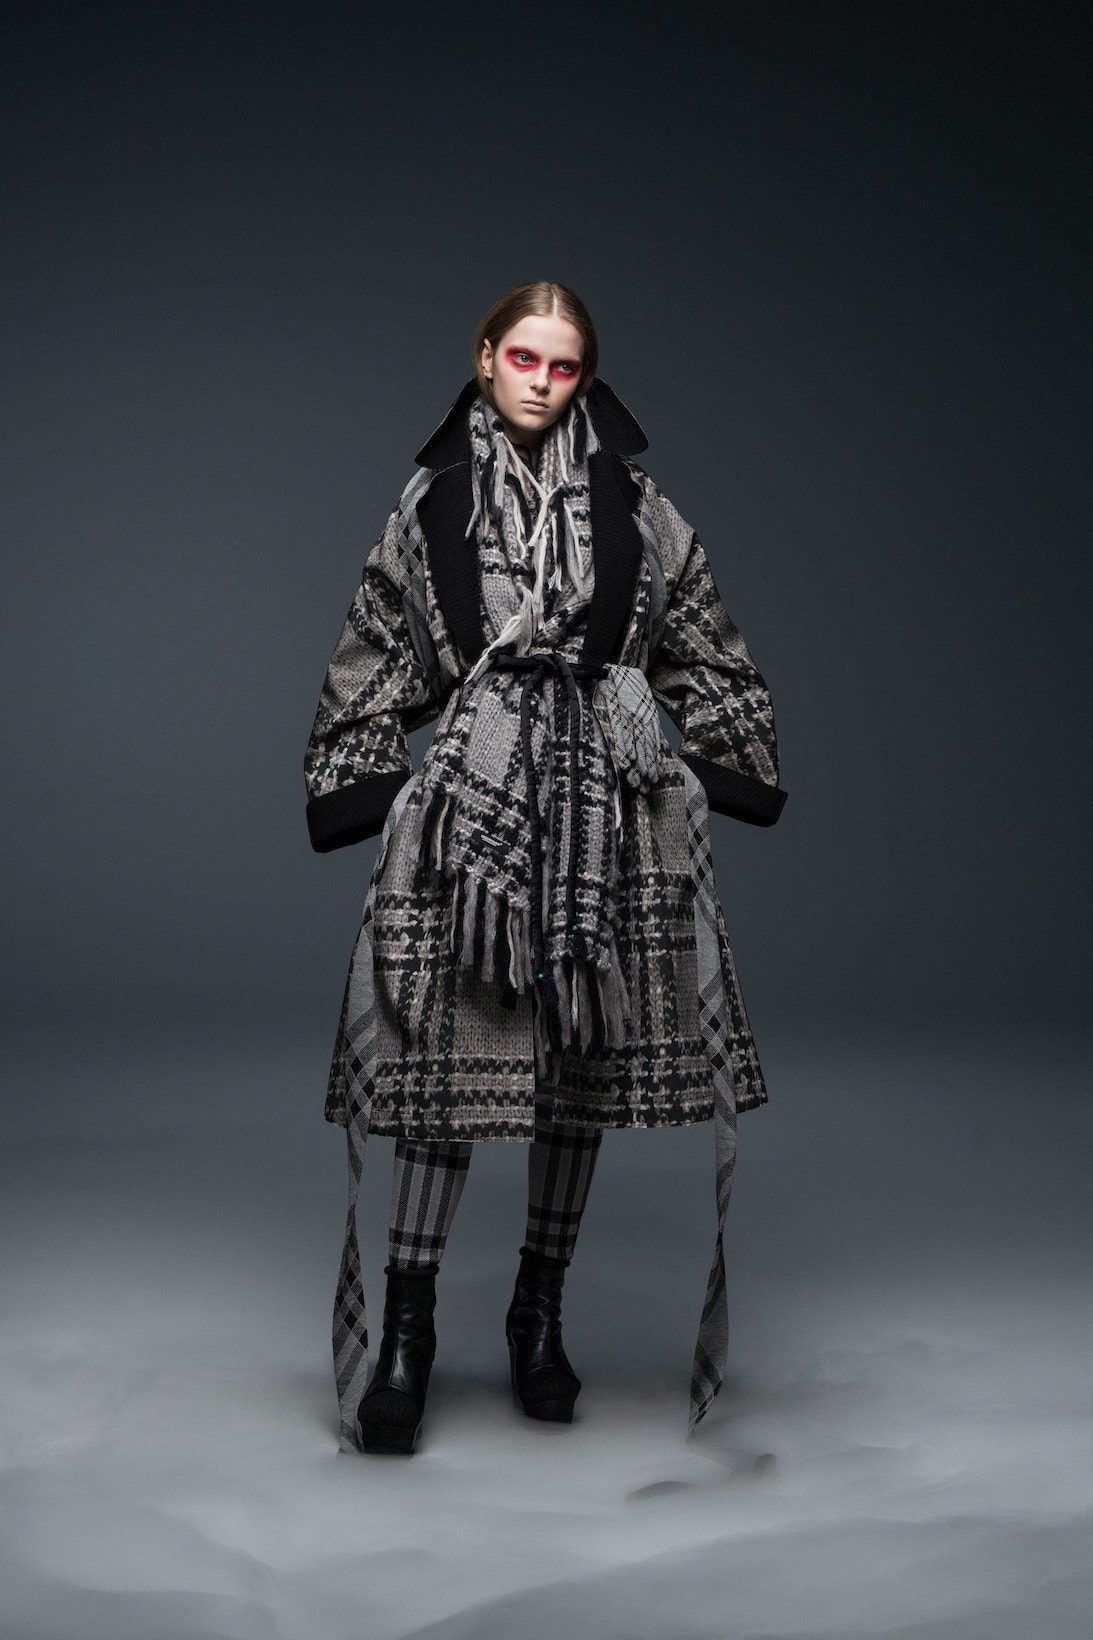 undercover jun takahashi paris fashion week fall winter womens collection lady macbeth akira kurosawa throne of blood gown jacket outerwear black maroon pants boots